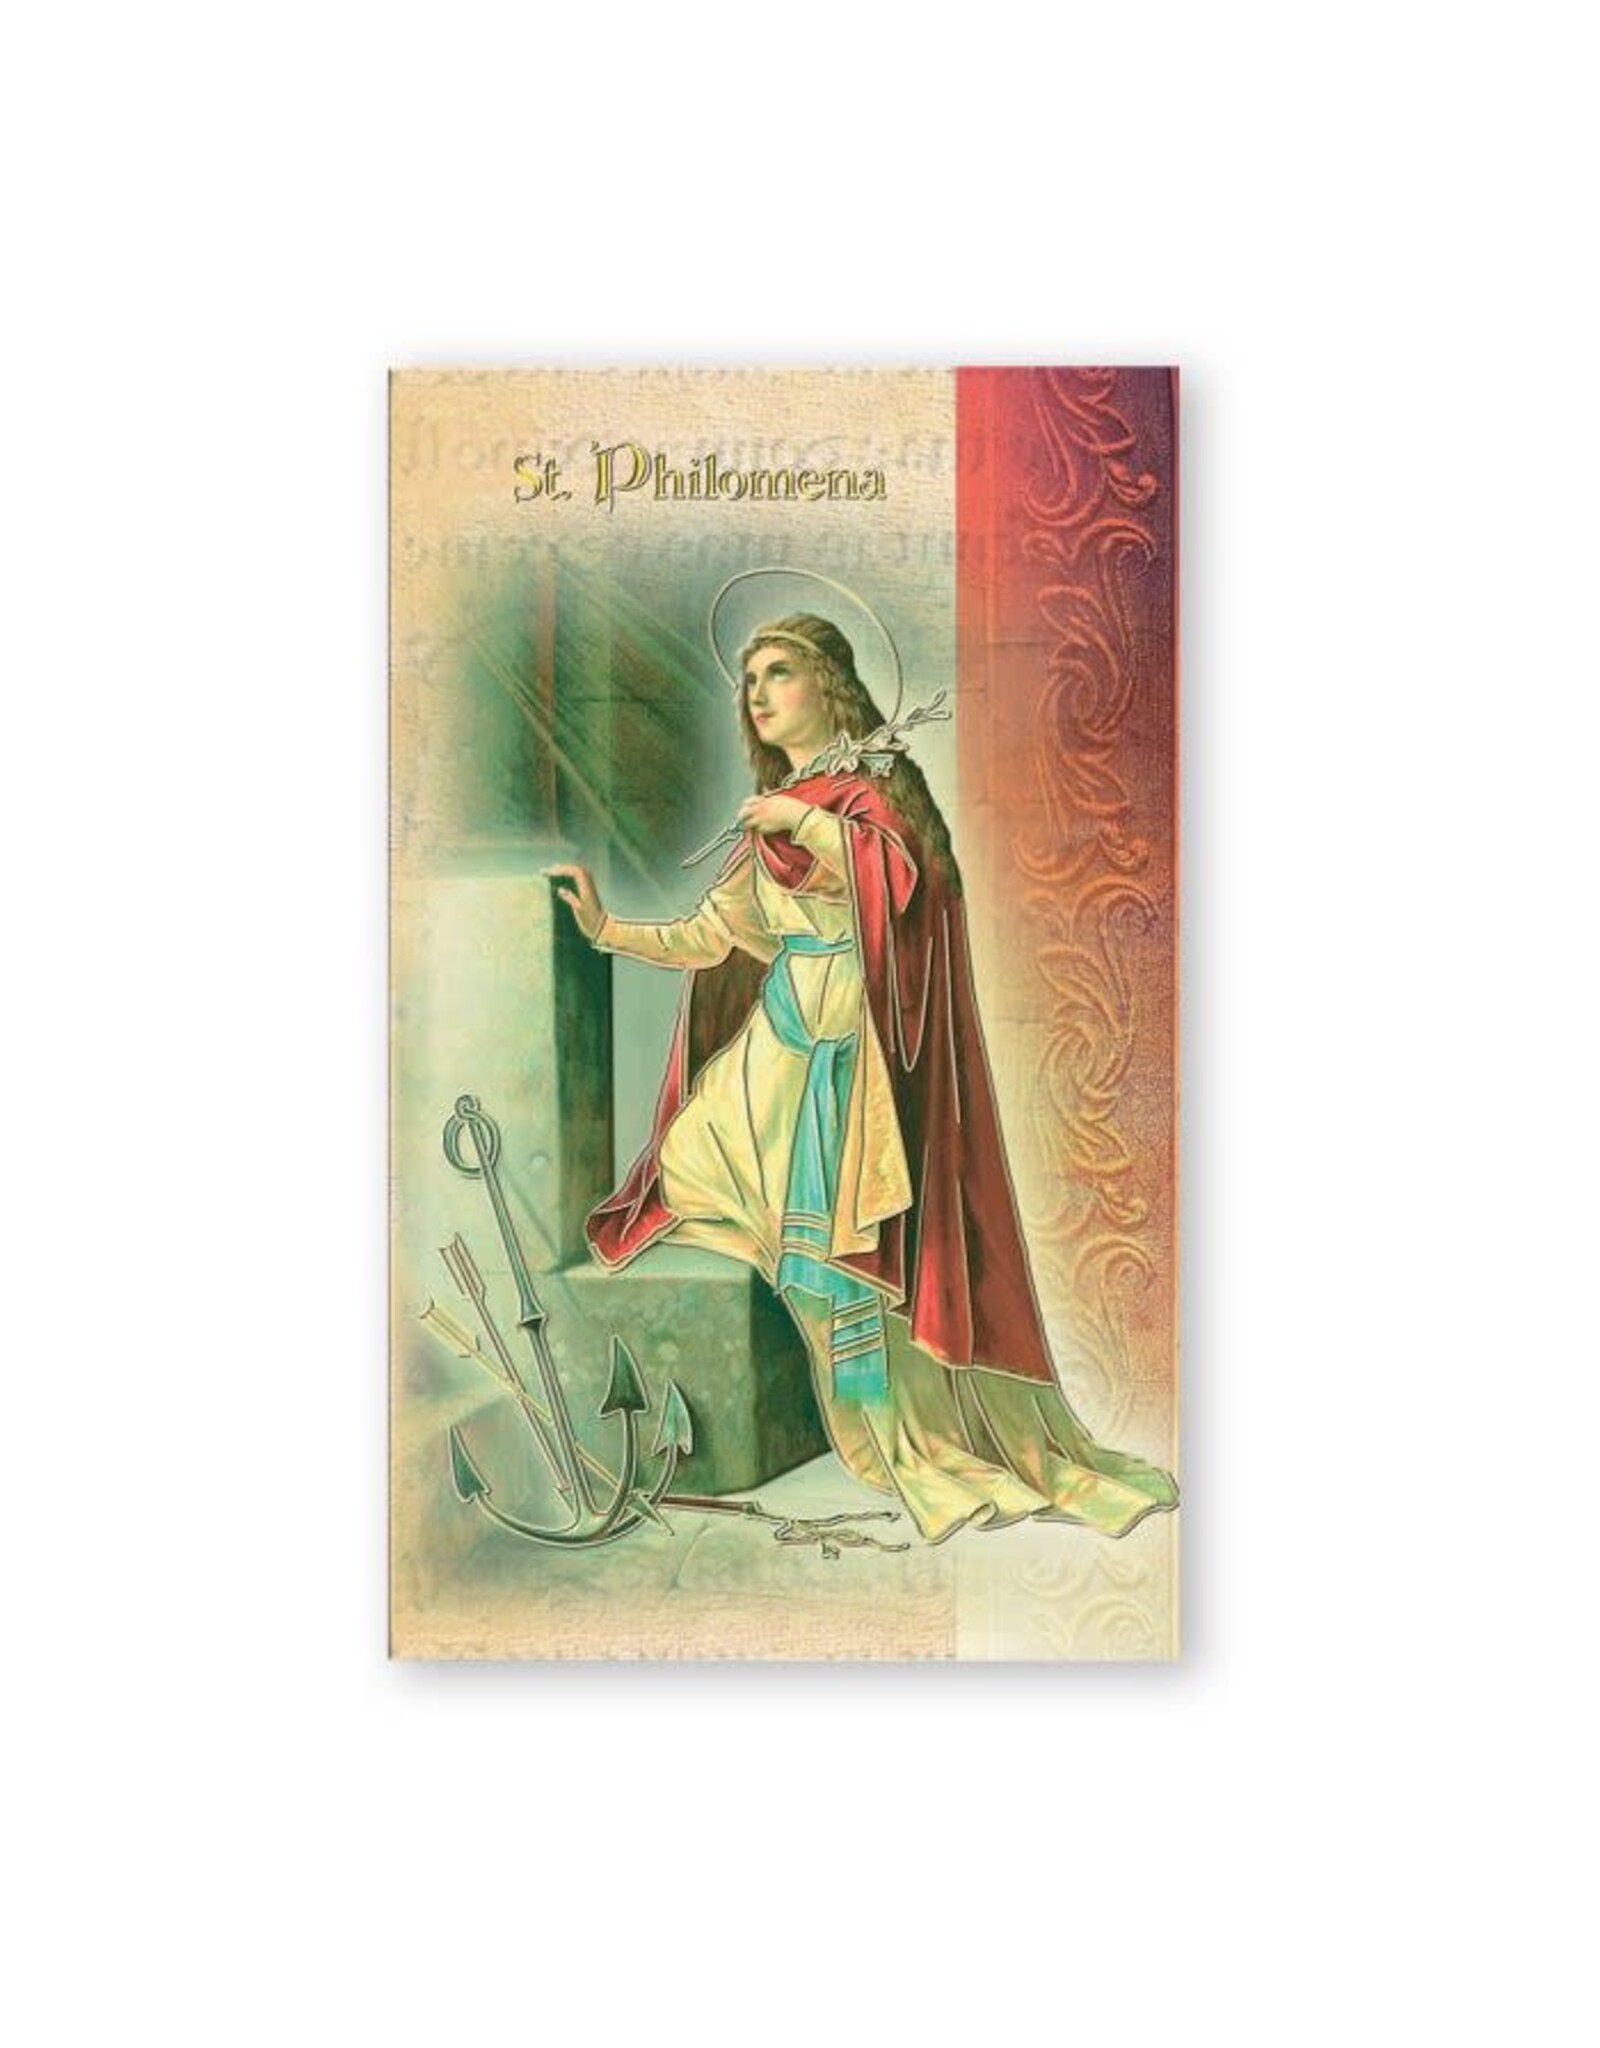 Hirten Saint Biography Folder - St. Philomena